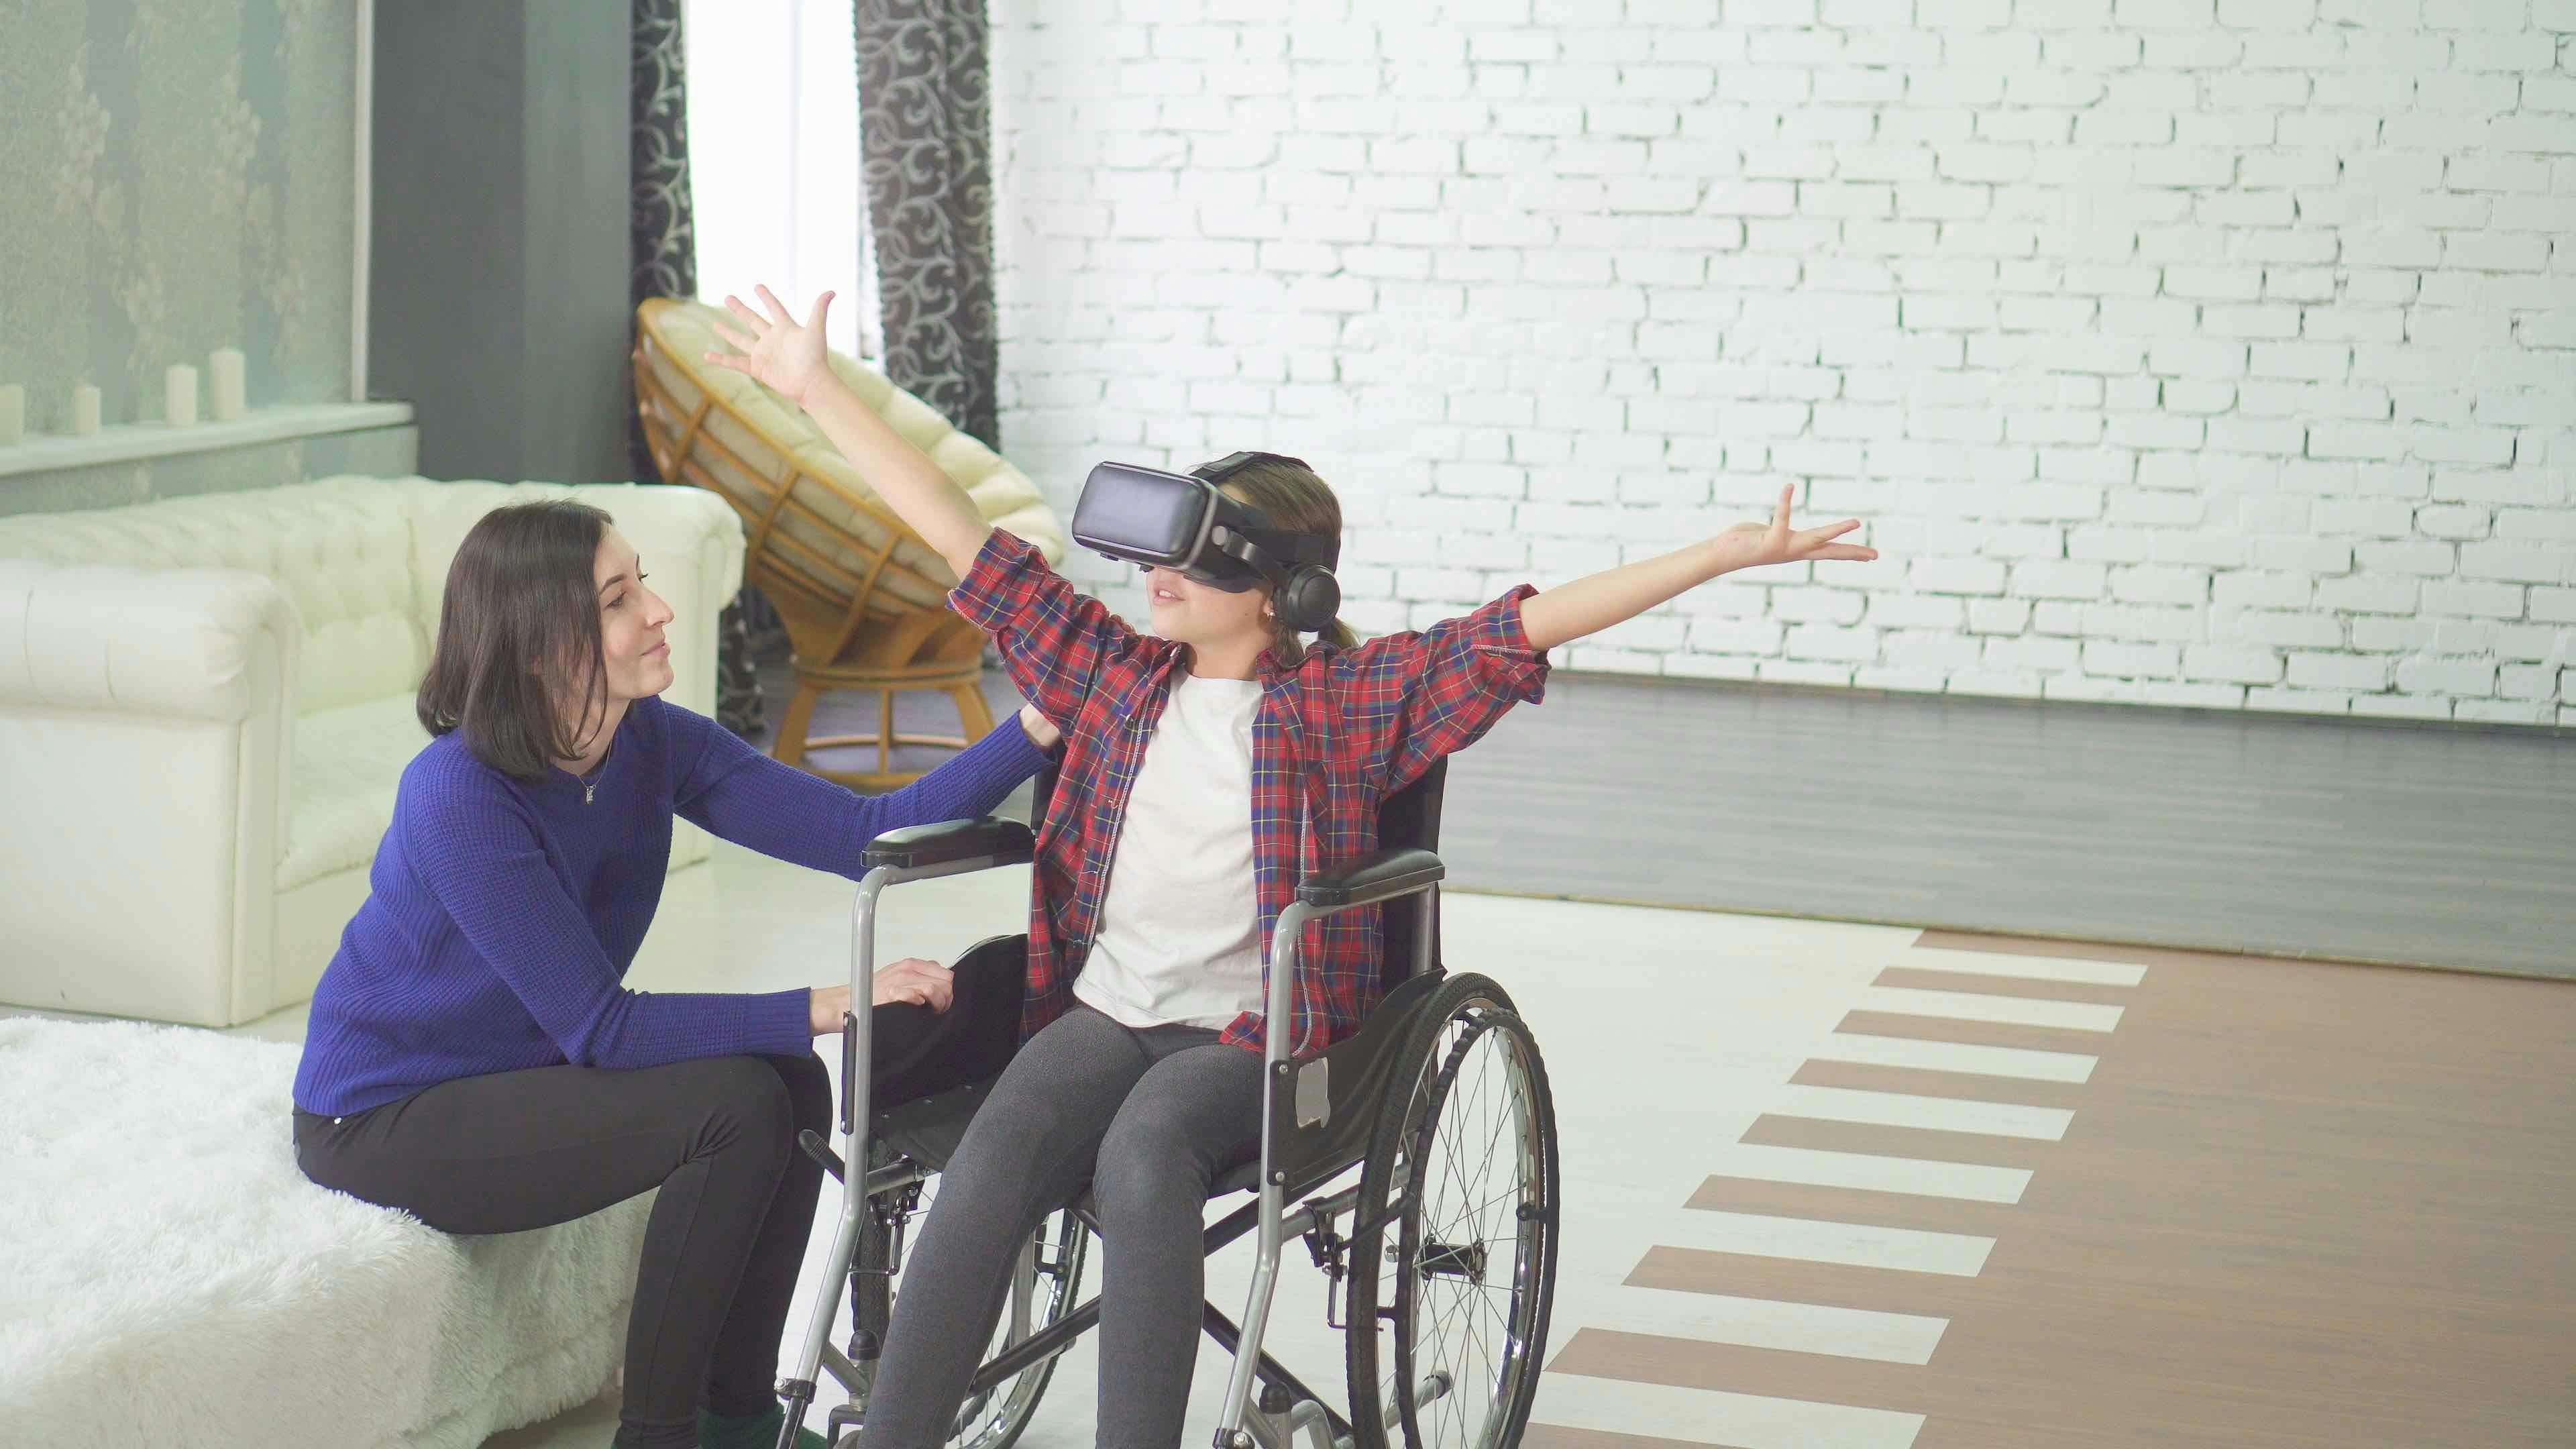 Using virtual reality device in wheelchair | Image credit: petrushin1984 - stock.adobe.com